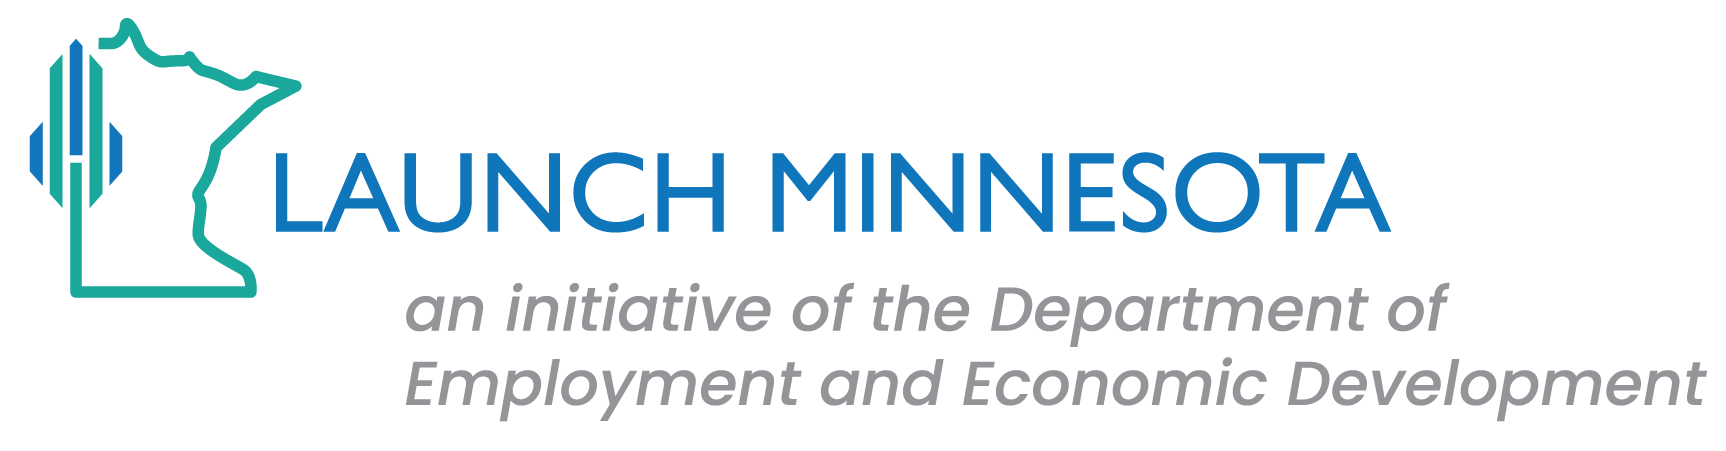 Launch Minnesota logo